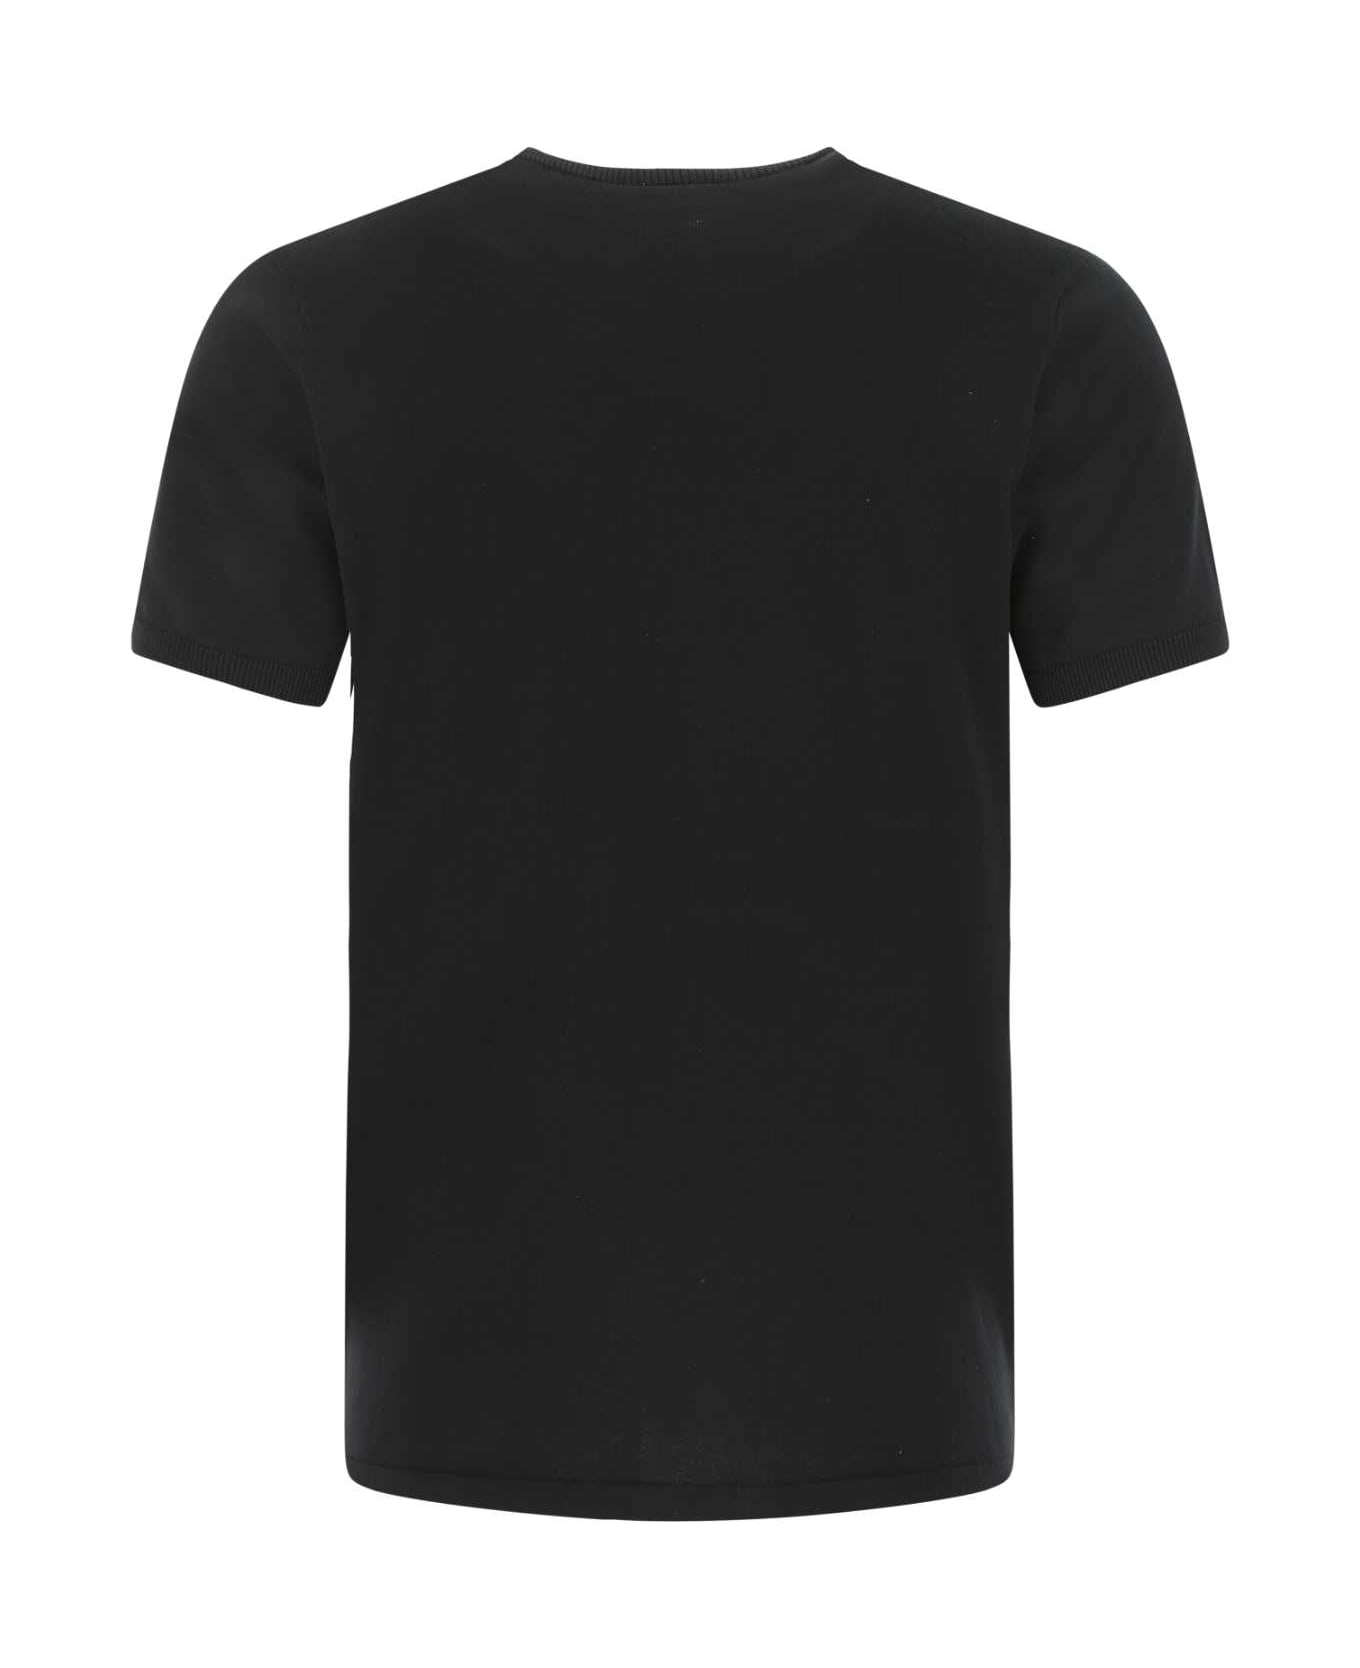 Aspesi Black Cotton T-shirt - 01241